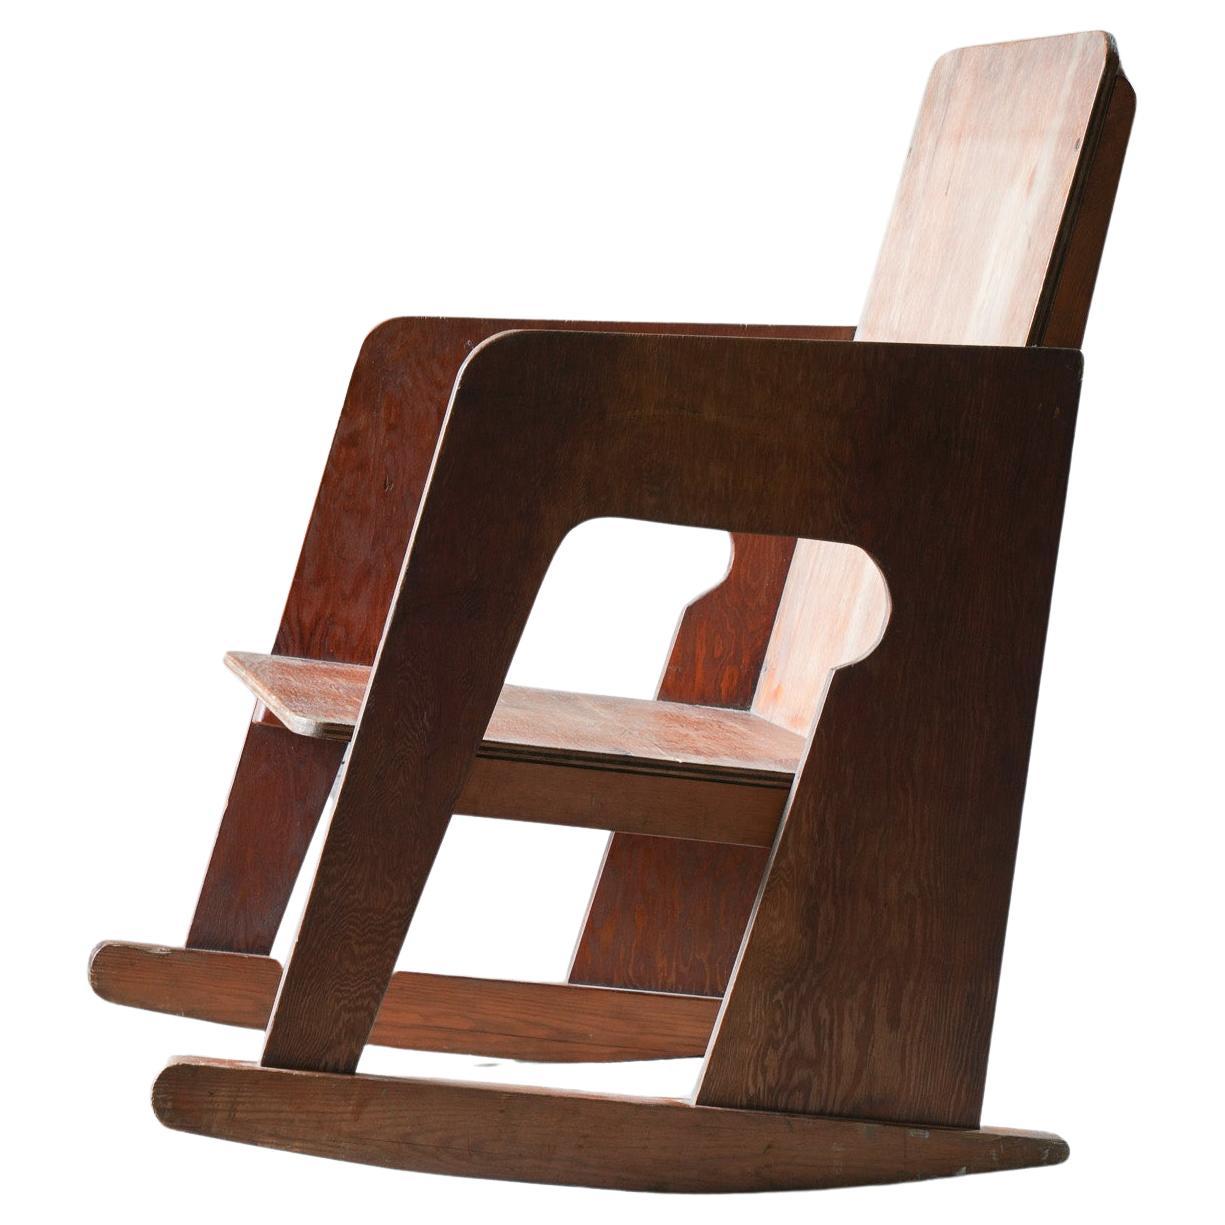 Un rocking-chair moderniste